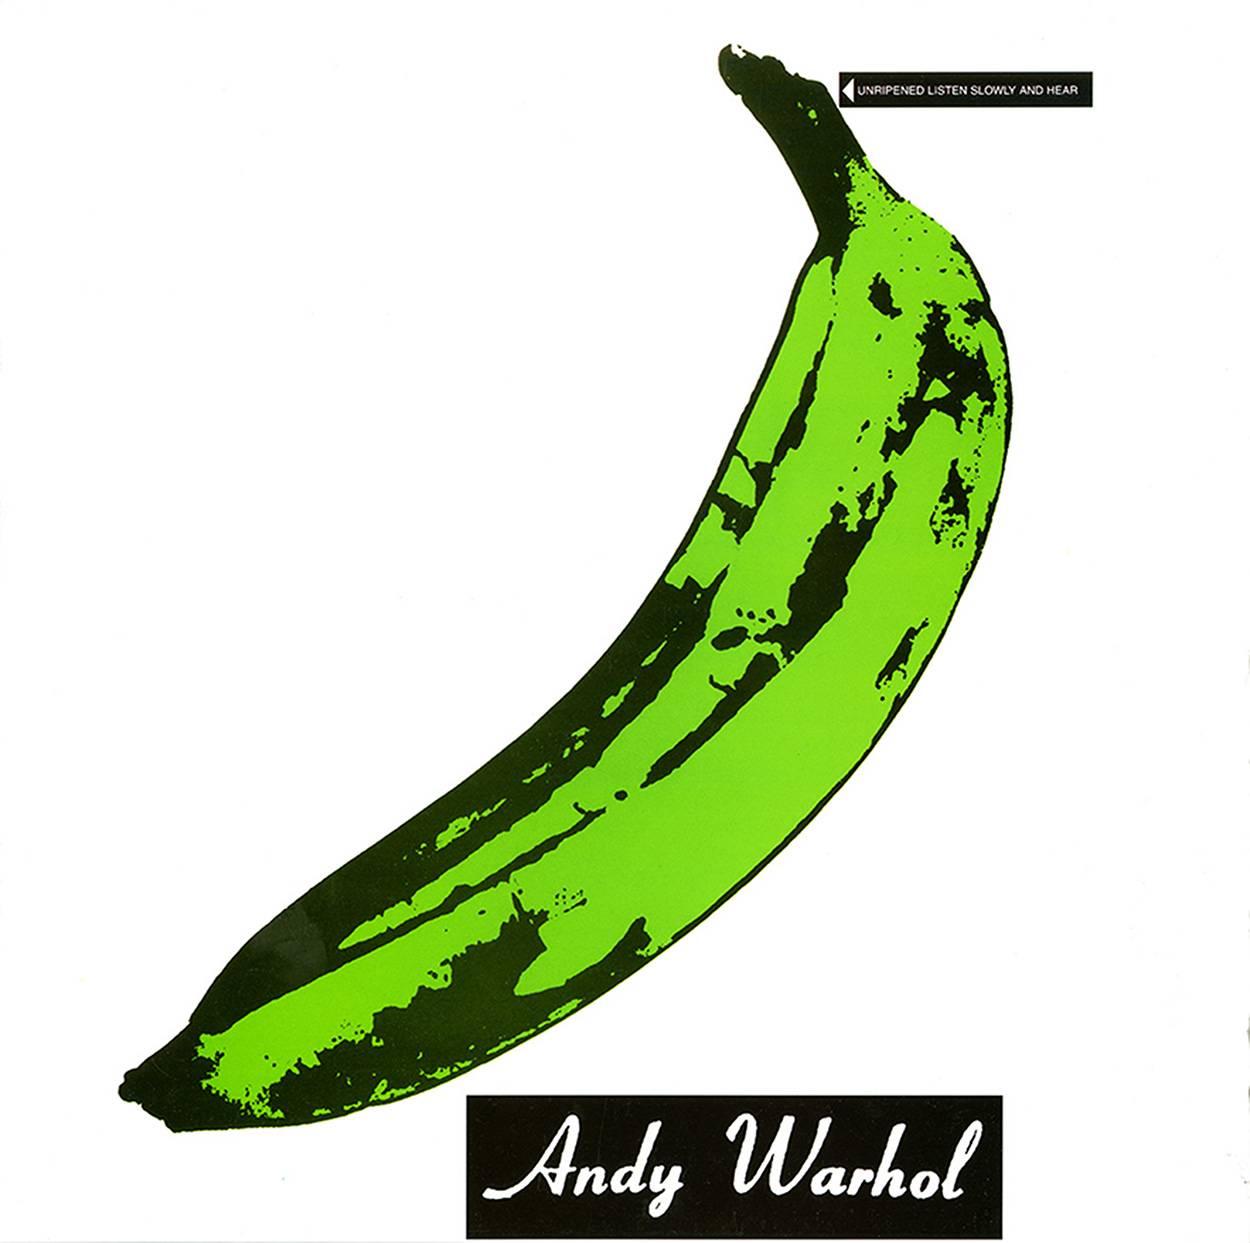 Rare Velvet Underground Vinyl Record (Warhol Banana) - Art by Andy Warhol